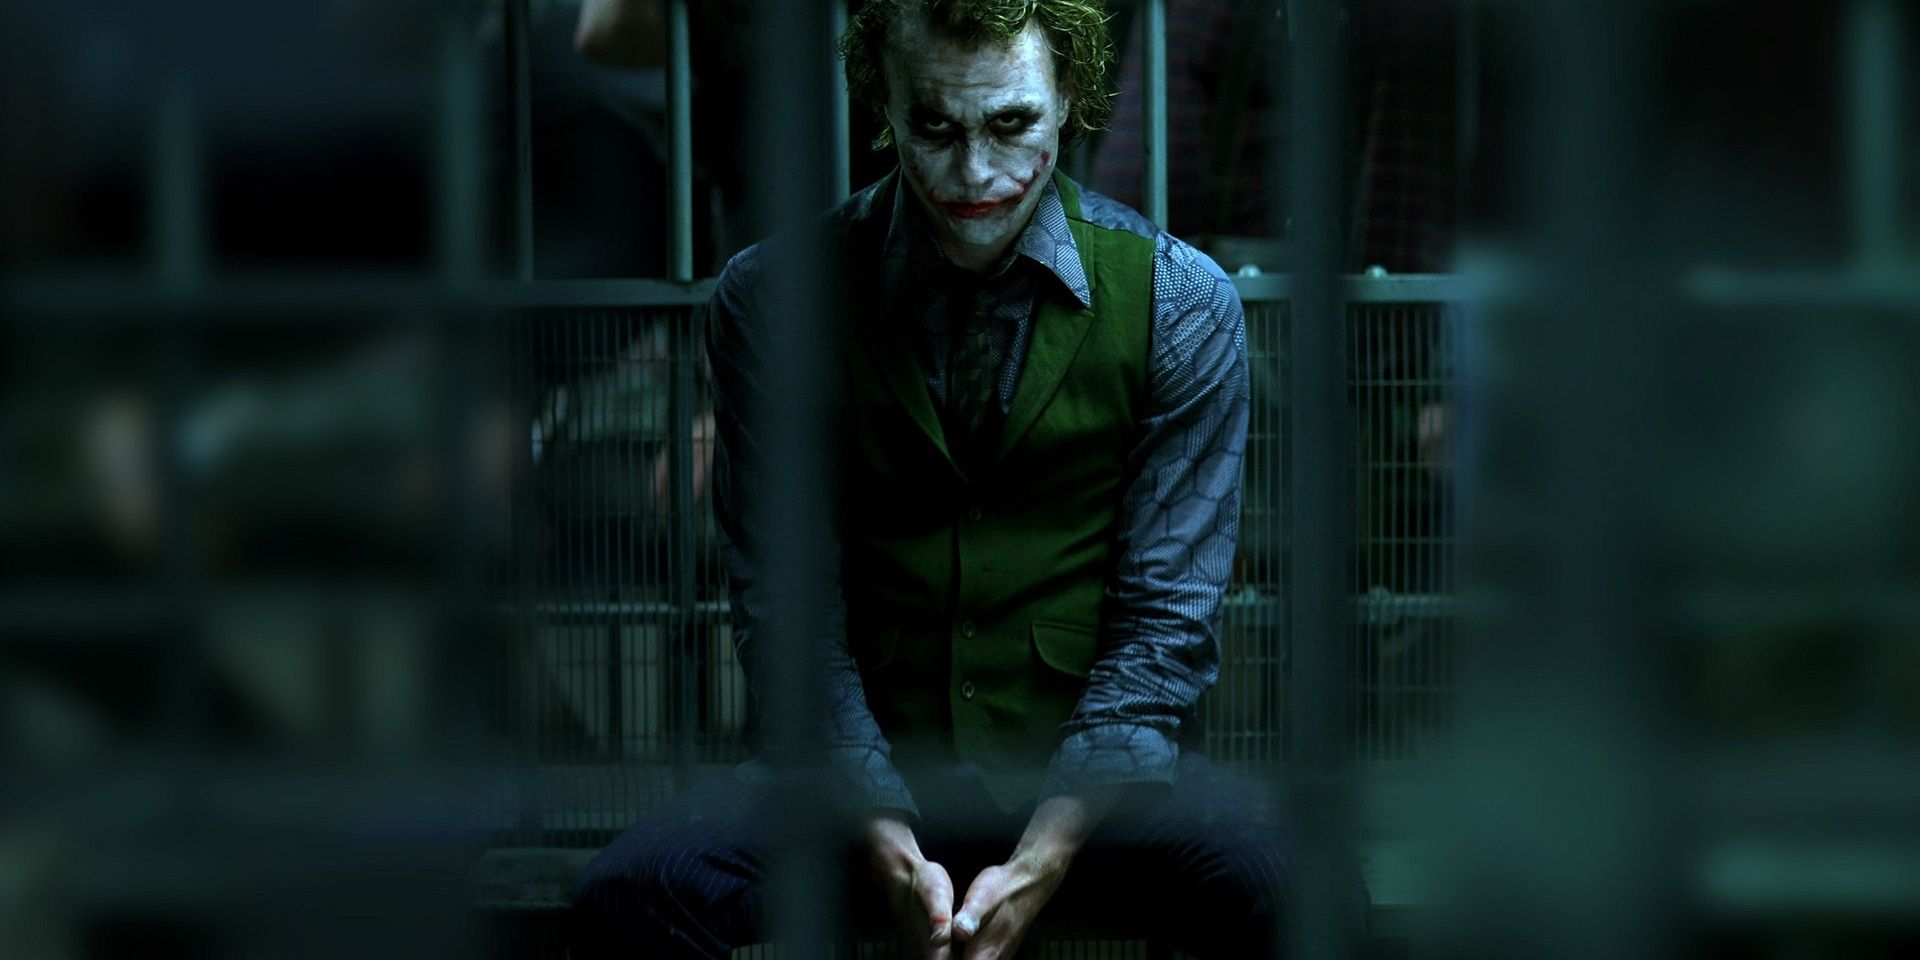 Joker in a cell from The Dark Knight